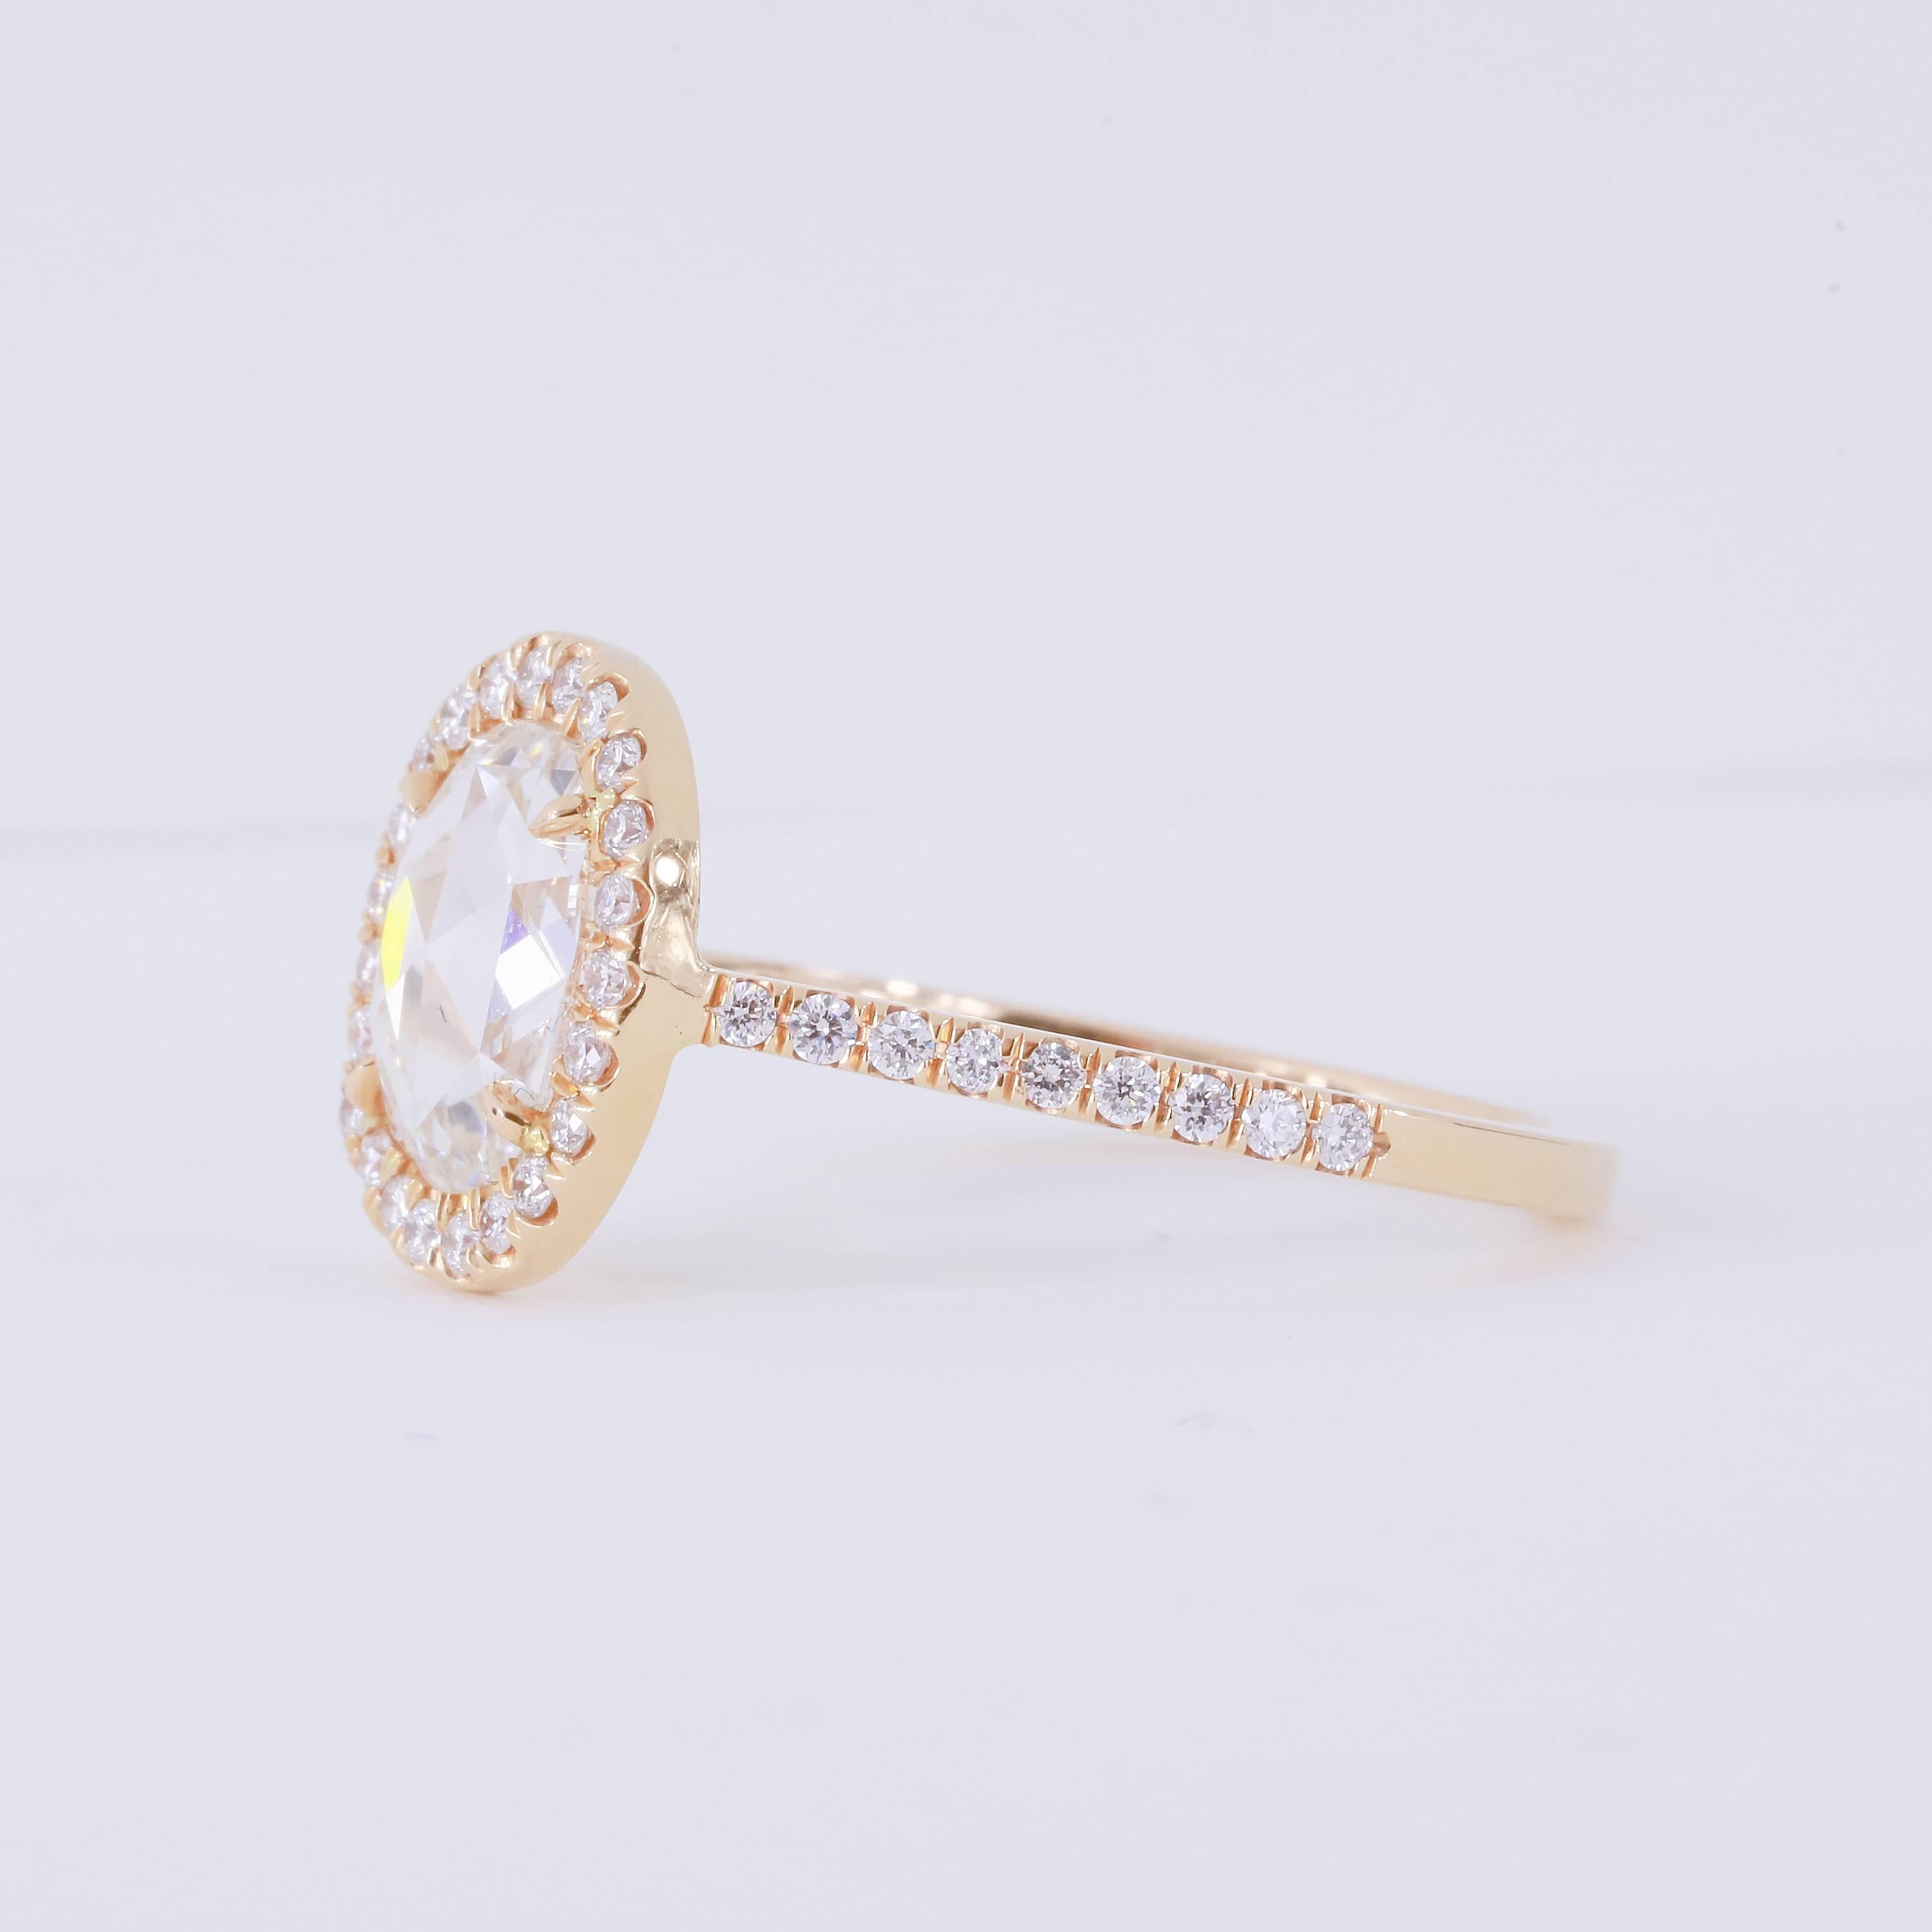 Oval Rose cut diamond diamond ring with 1.49 ct F VS center
Round diamond melee 0.31 tw (41 stones)
18k rose gold
Size 6.5